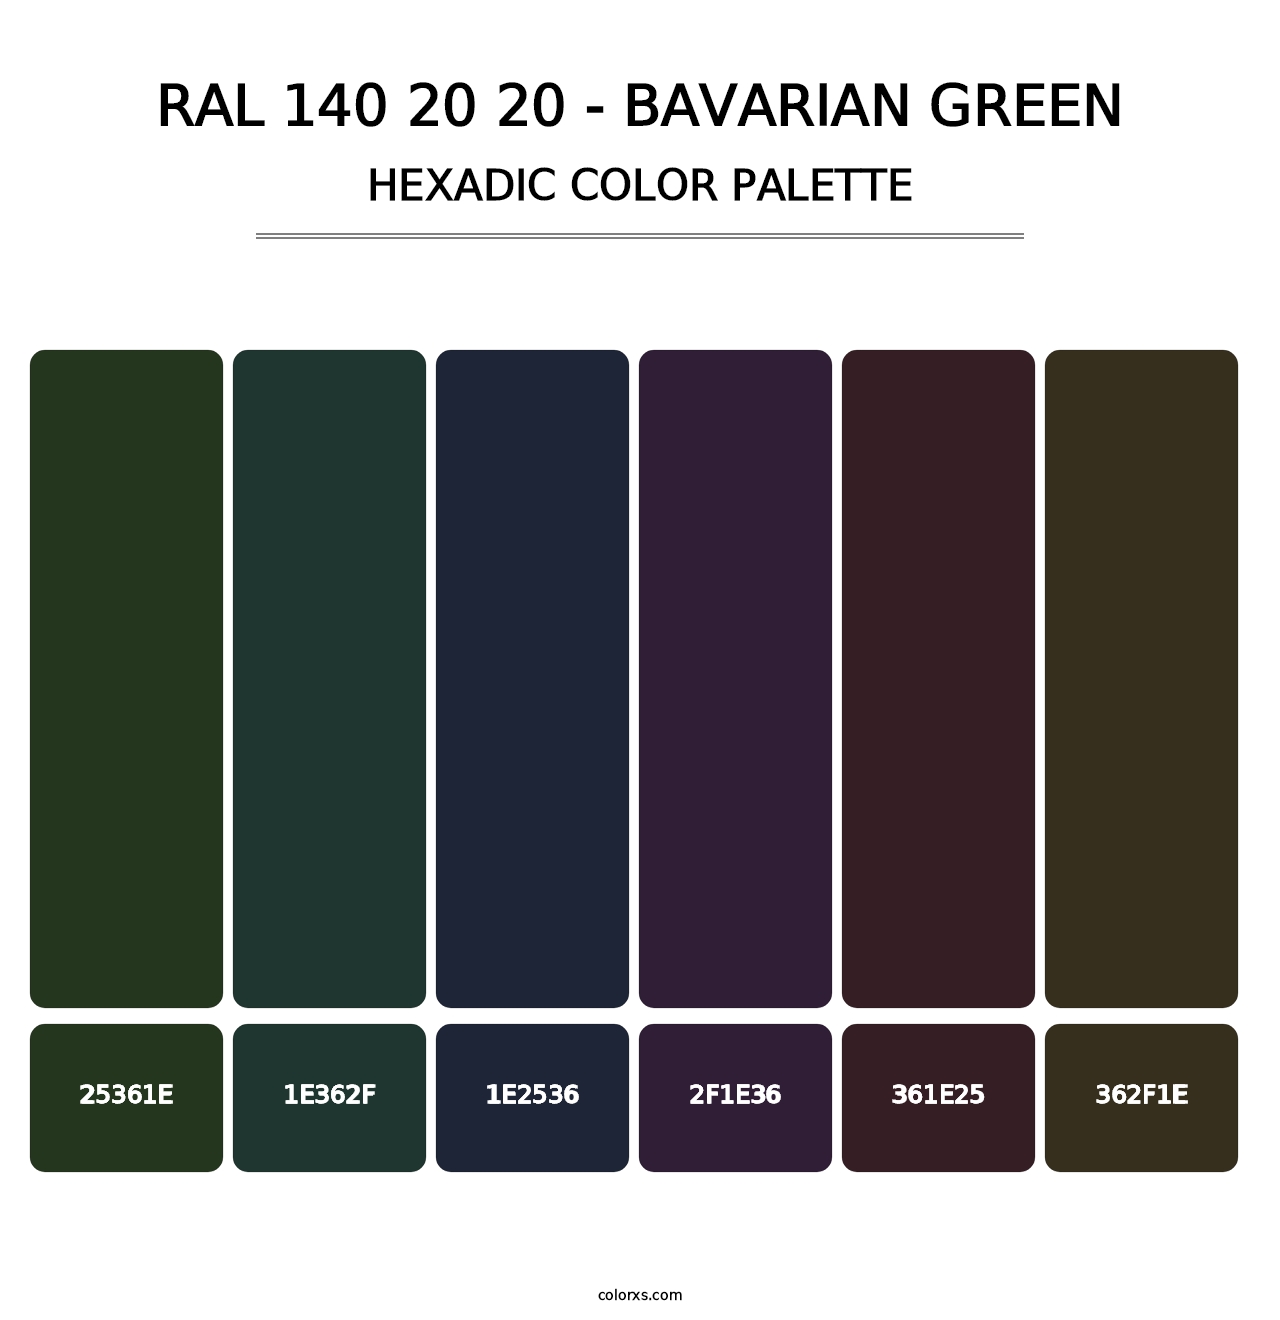 RAL 140 20 20 - Bavarian Green - Hexadic Color Palette